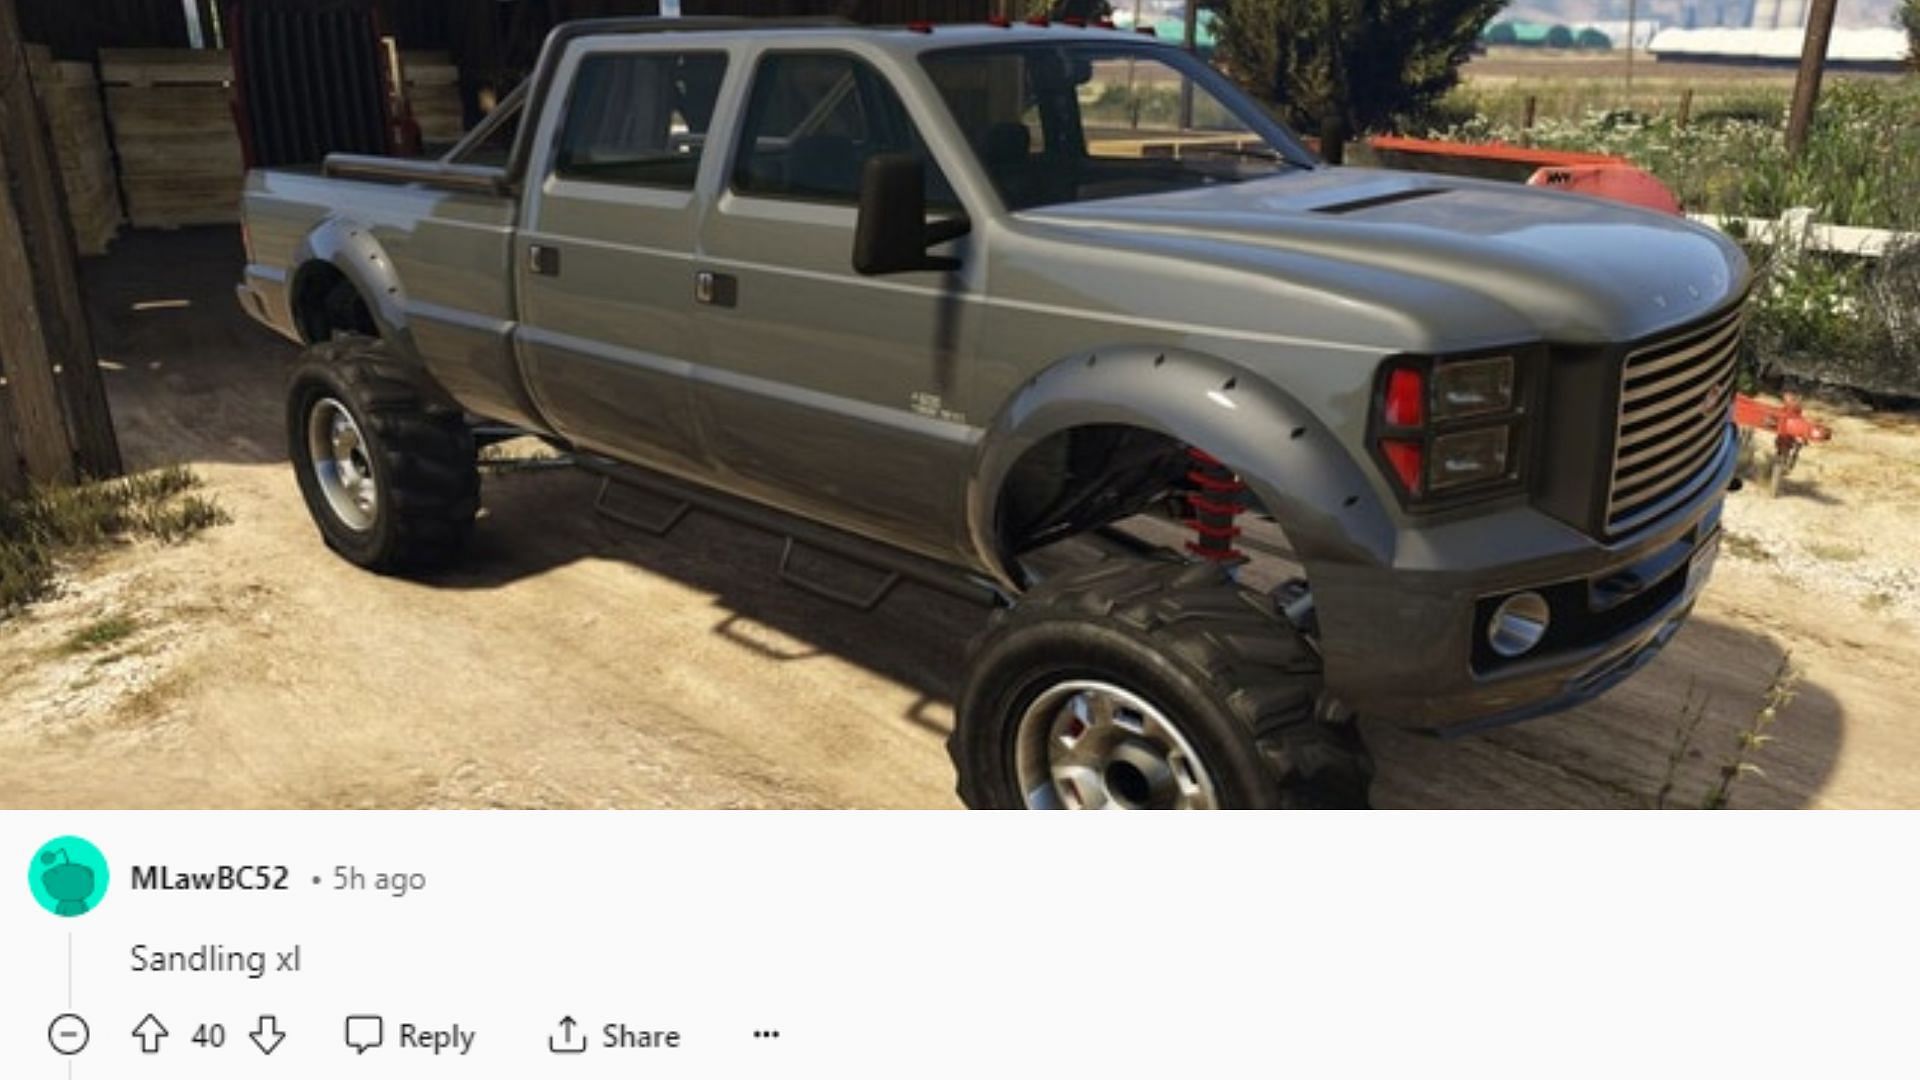 Sandking XL looks to be inspired by the Ford Super Duty (Images via Rockstar Games || Reddit: u/MLawBC52)